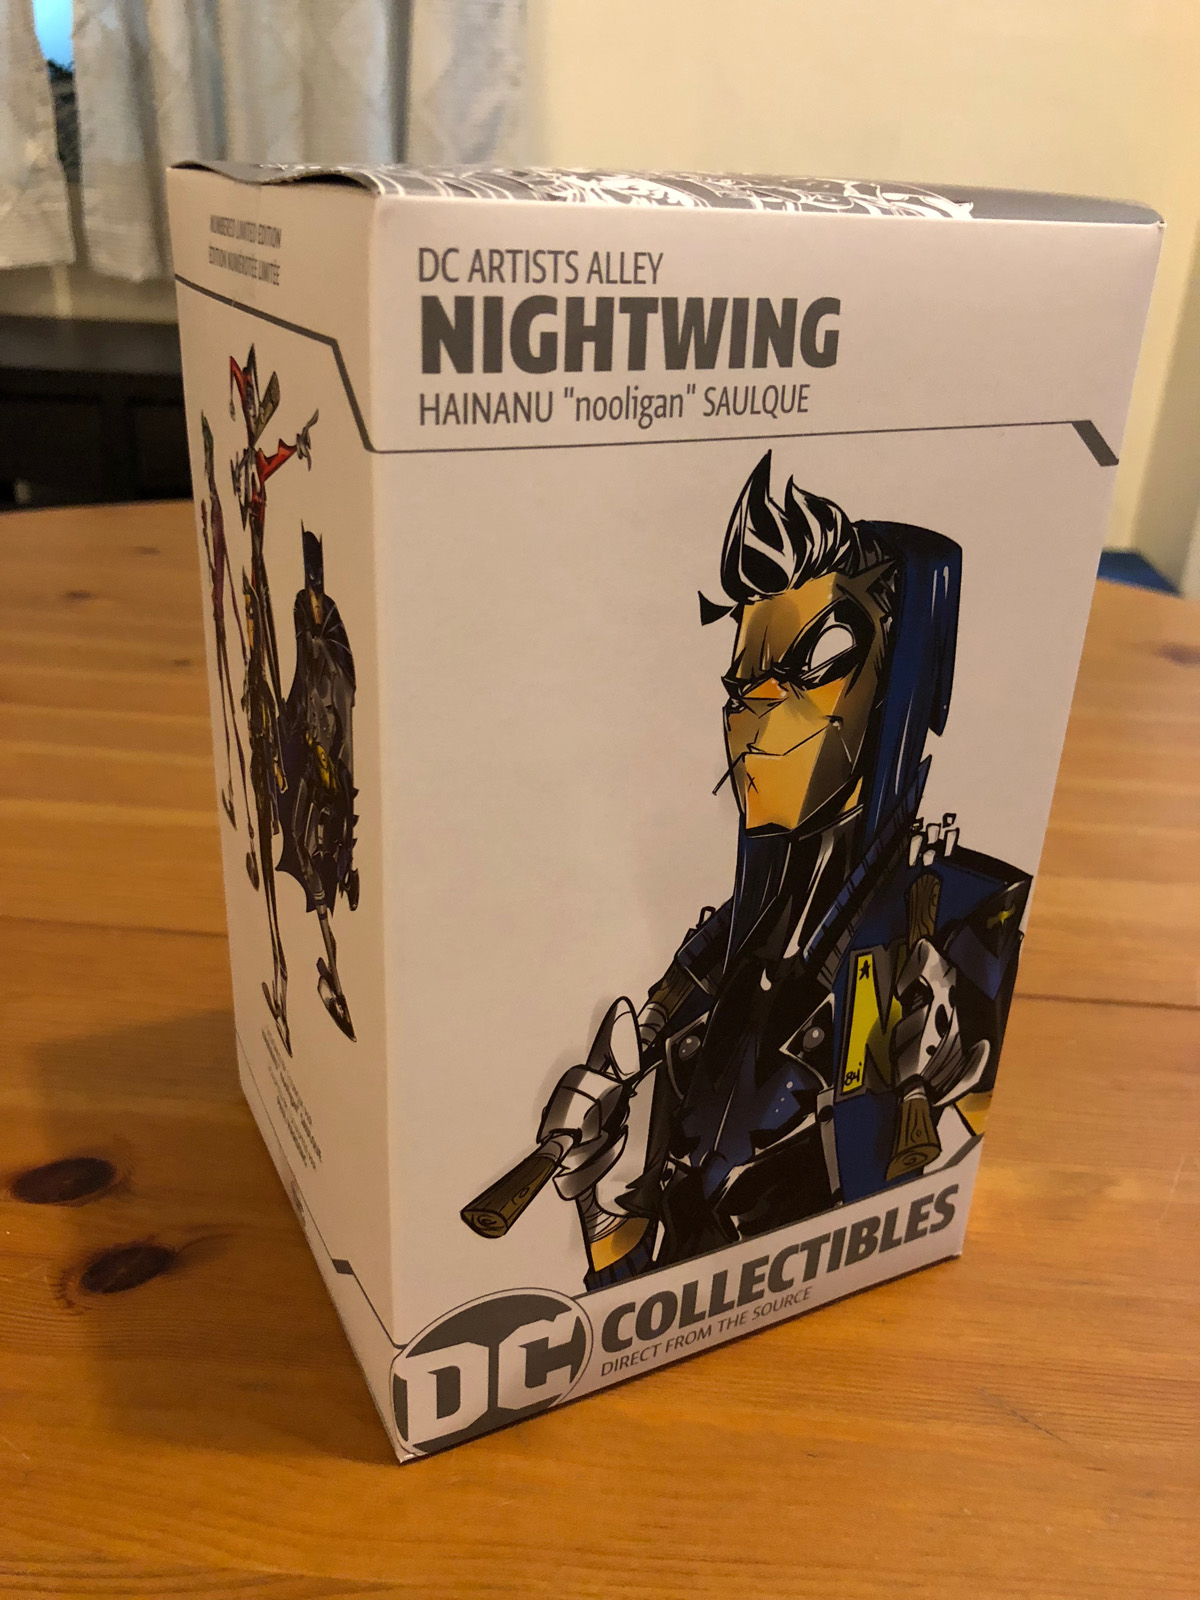 Nightwing by Nooligan